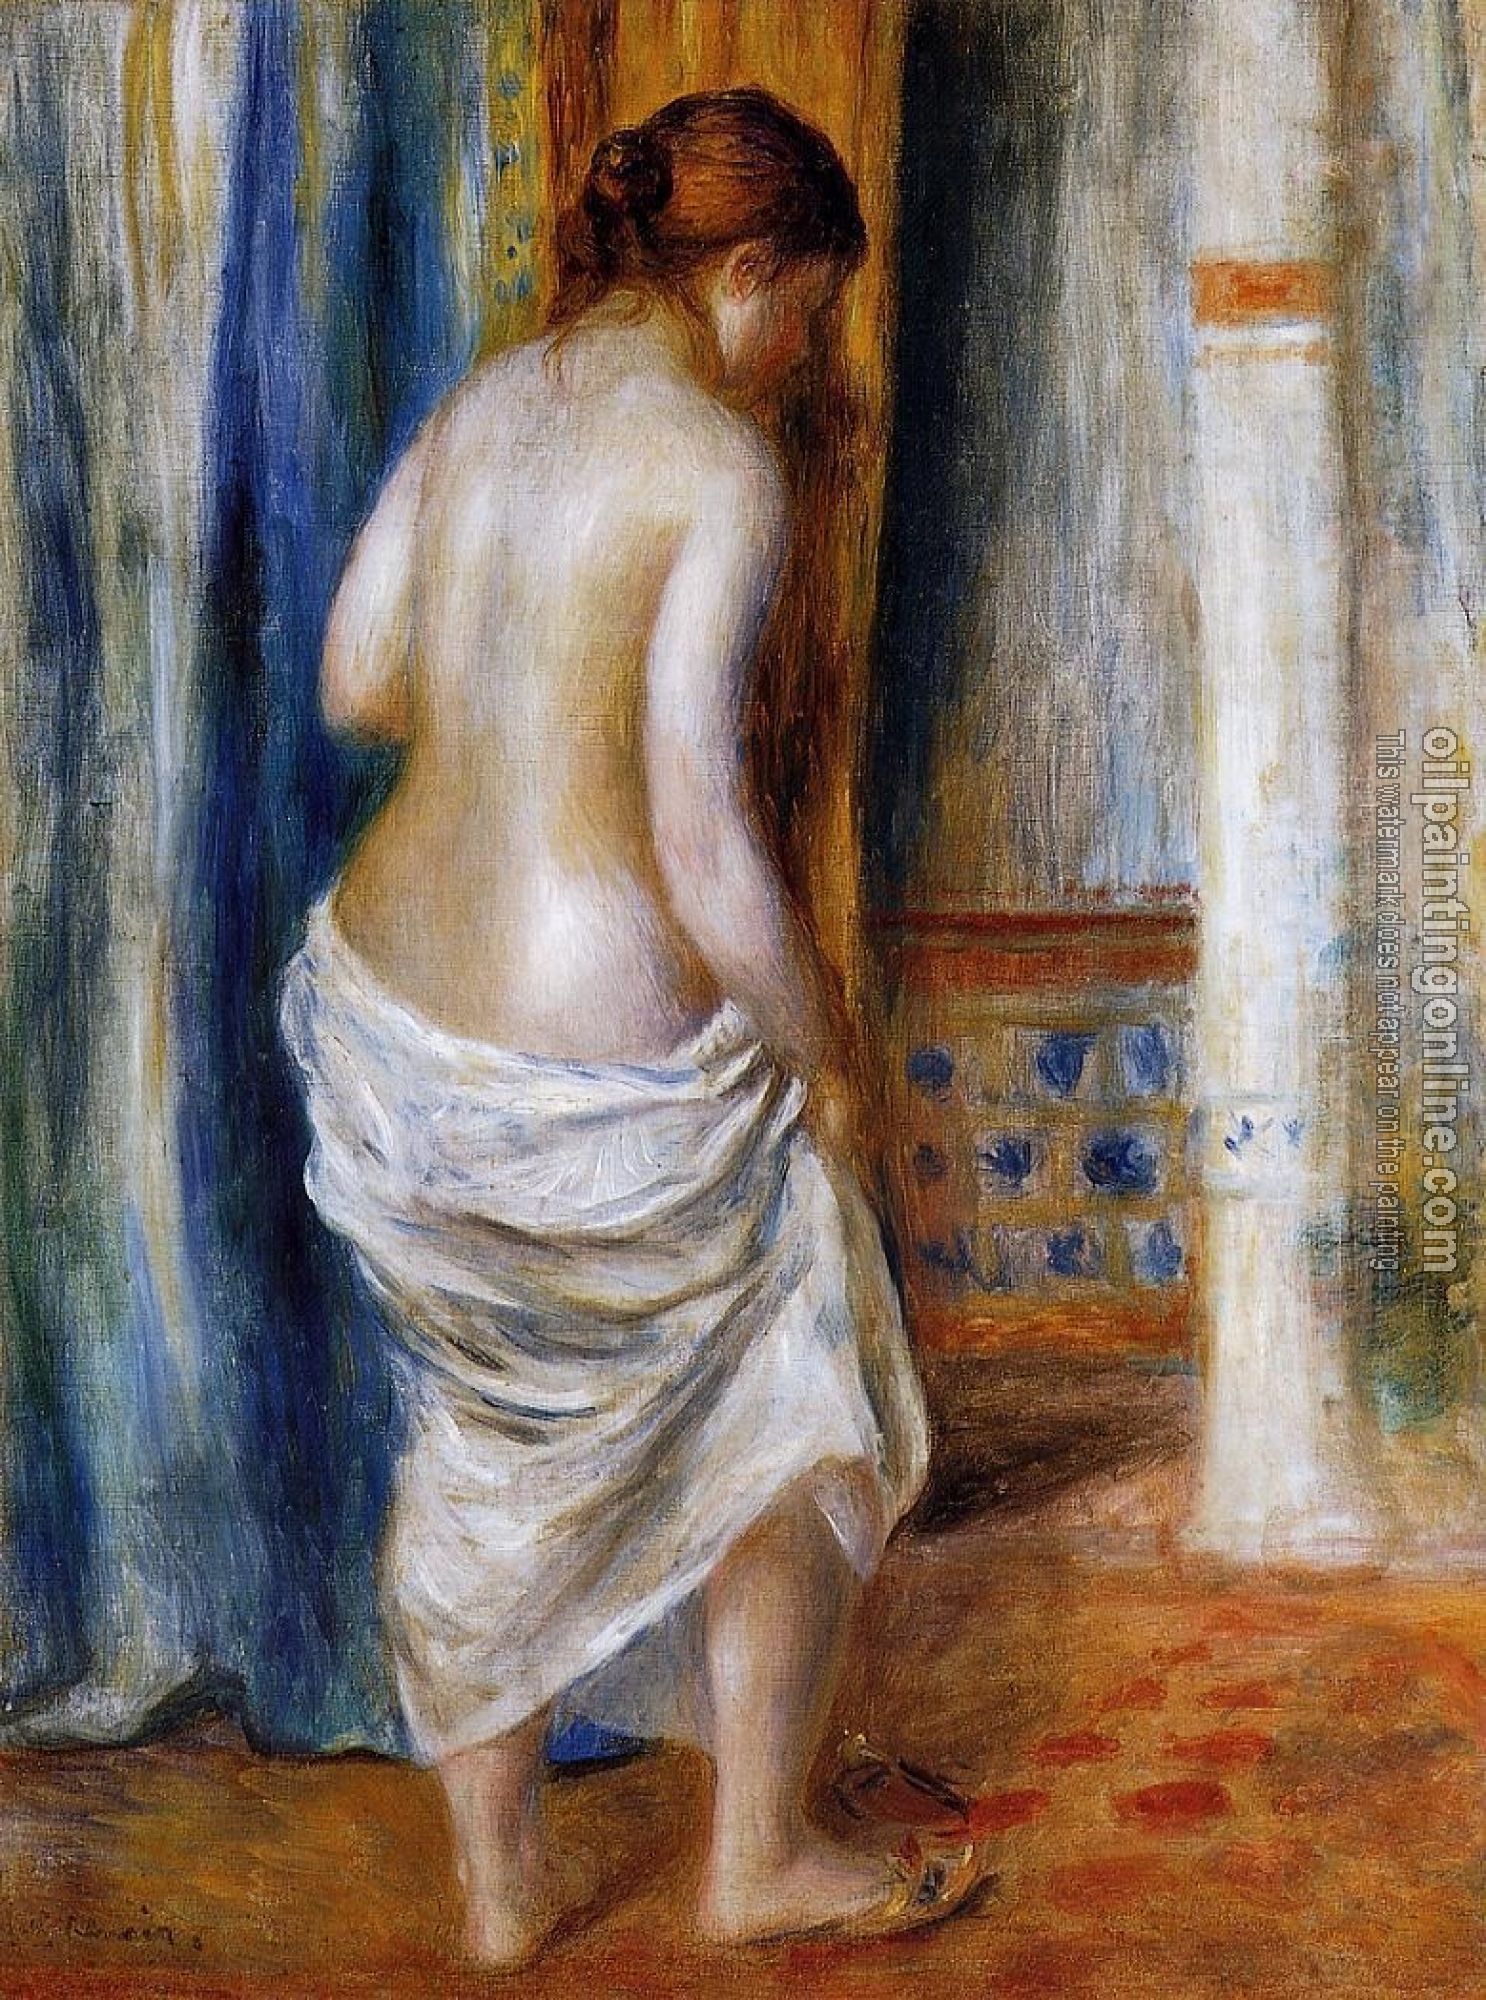 Renoir, Pierre Auguste - The Bathrobe